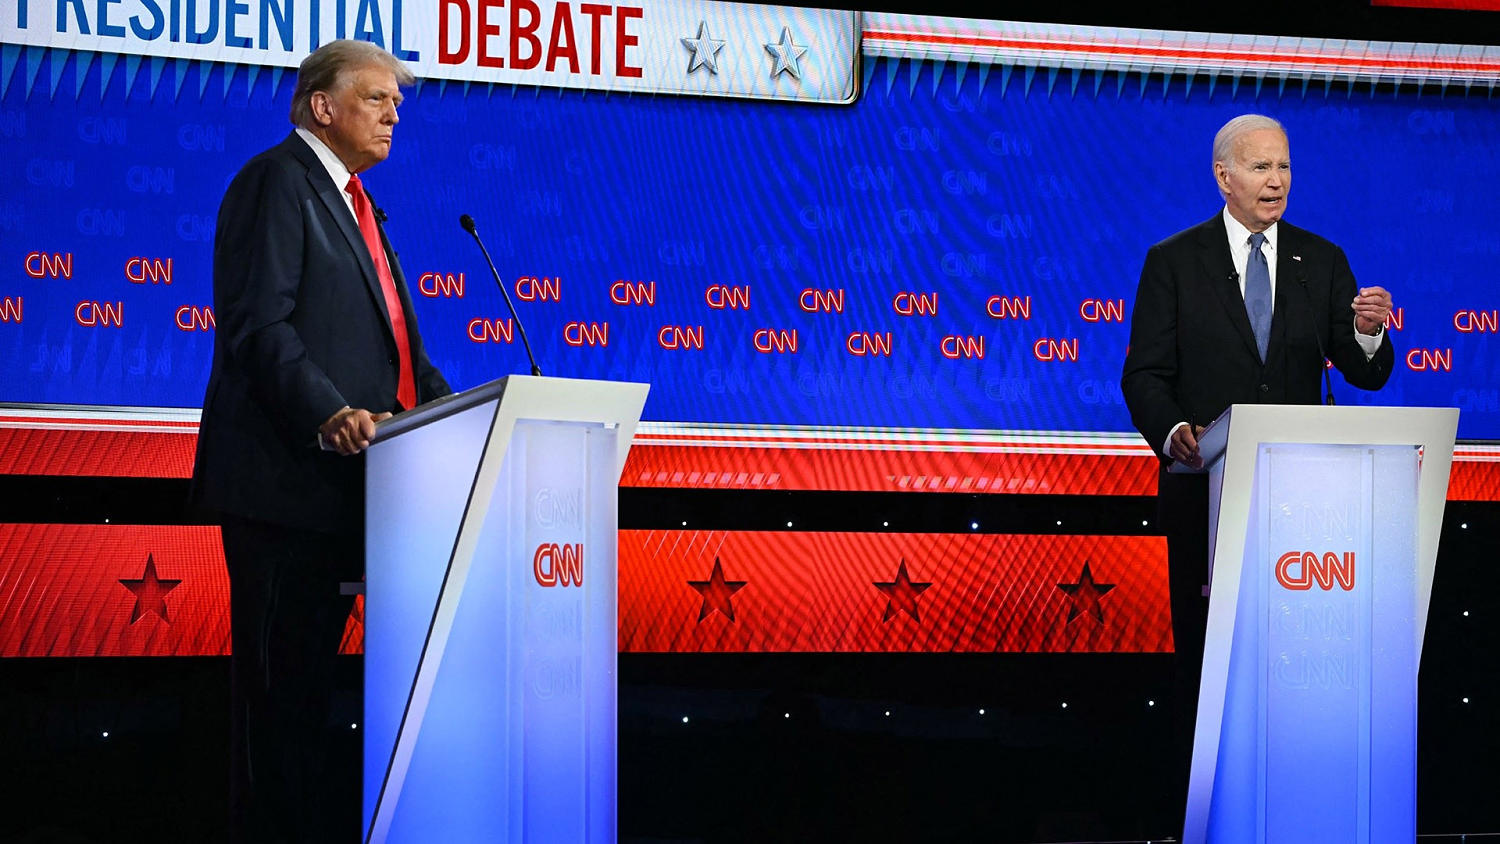 First Presidential Debate: Analysis